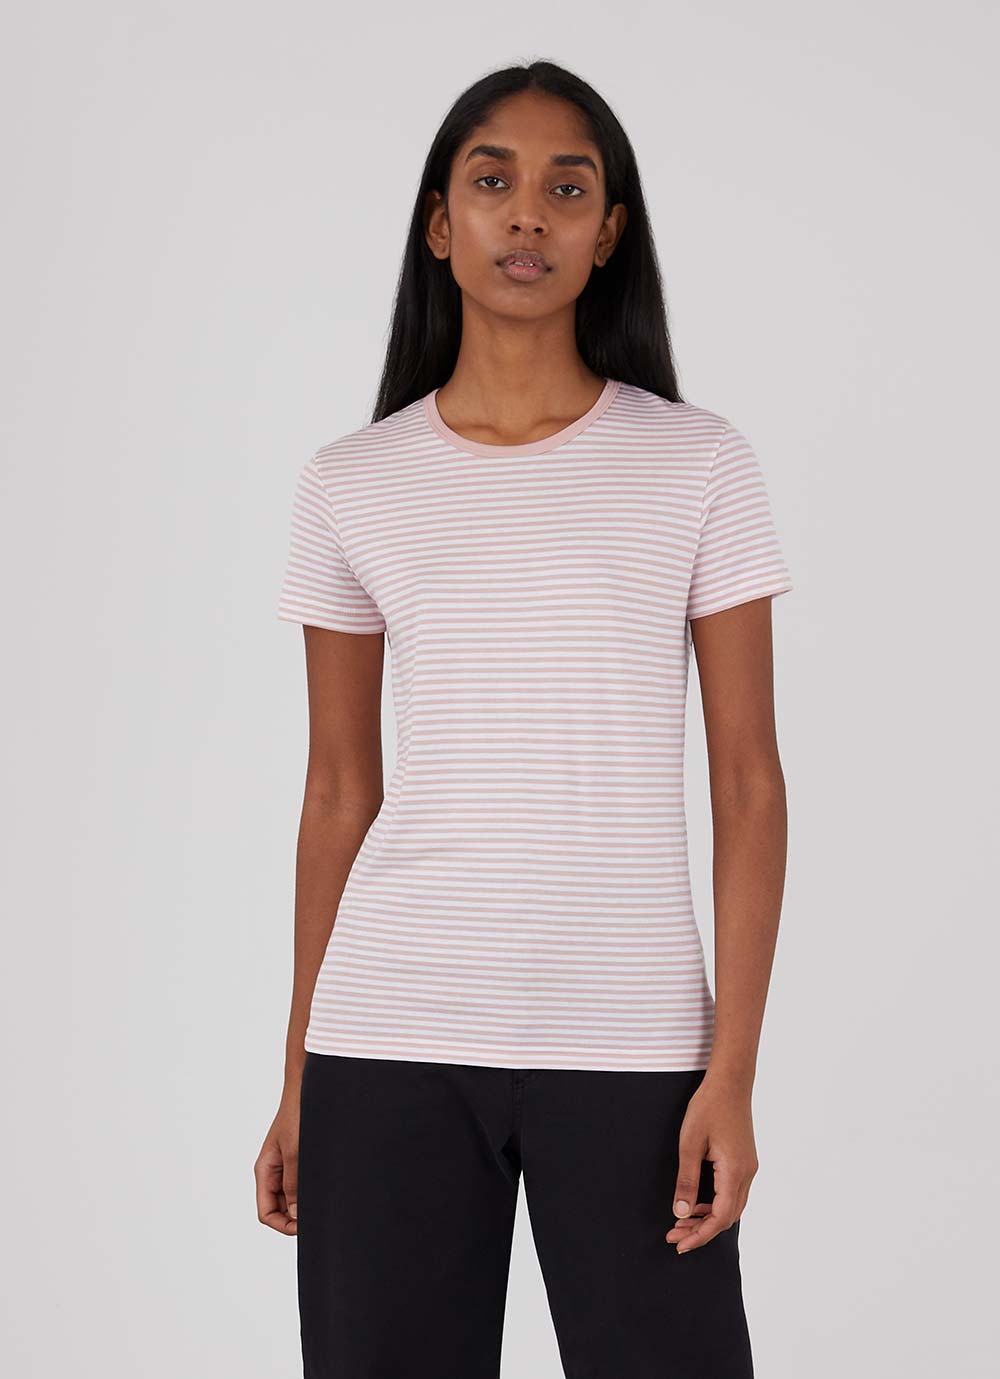 Women's Classic T-shirt in Dusty Pink/White English Stripe